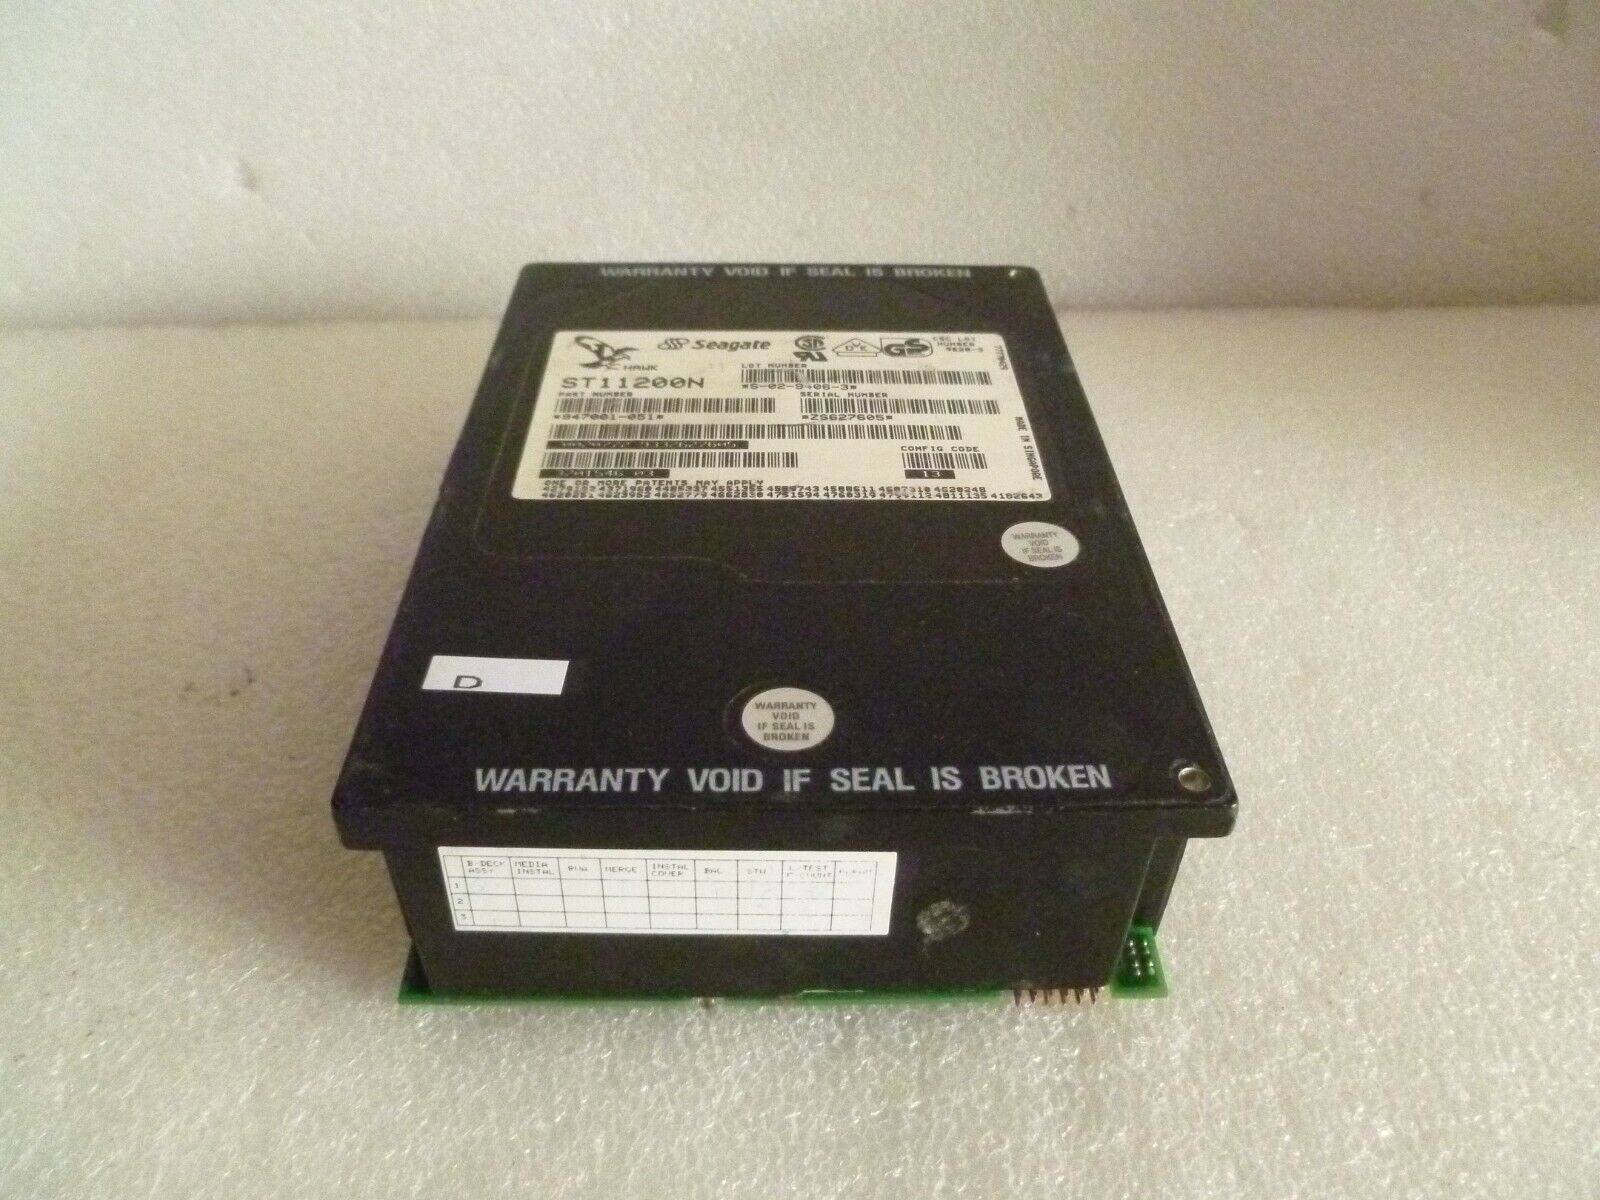 SEAGATE HAWK ST11200N 50-PIN SCSI HARD DRIVE P/N:947001-051 CONFIG CODE:13